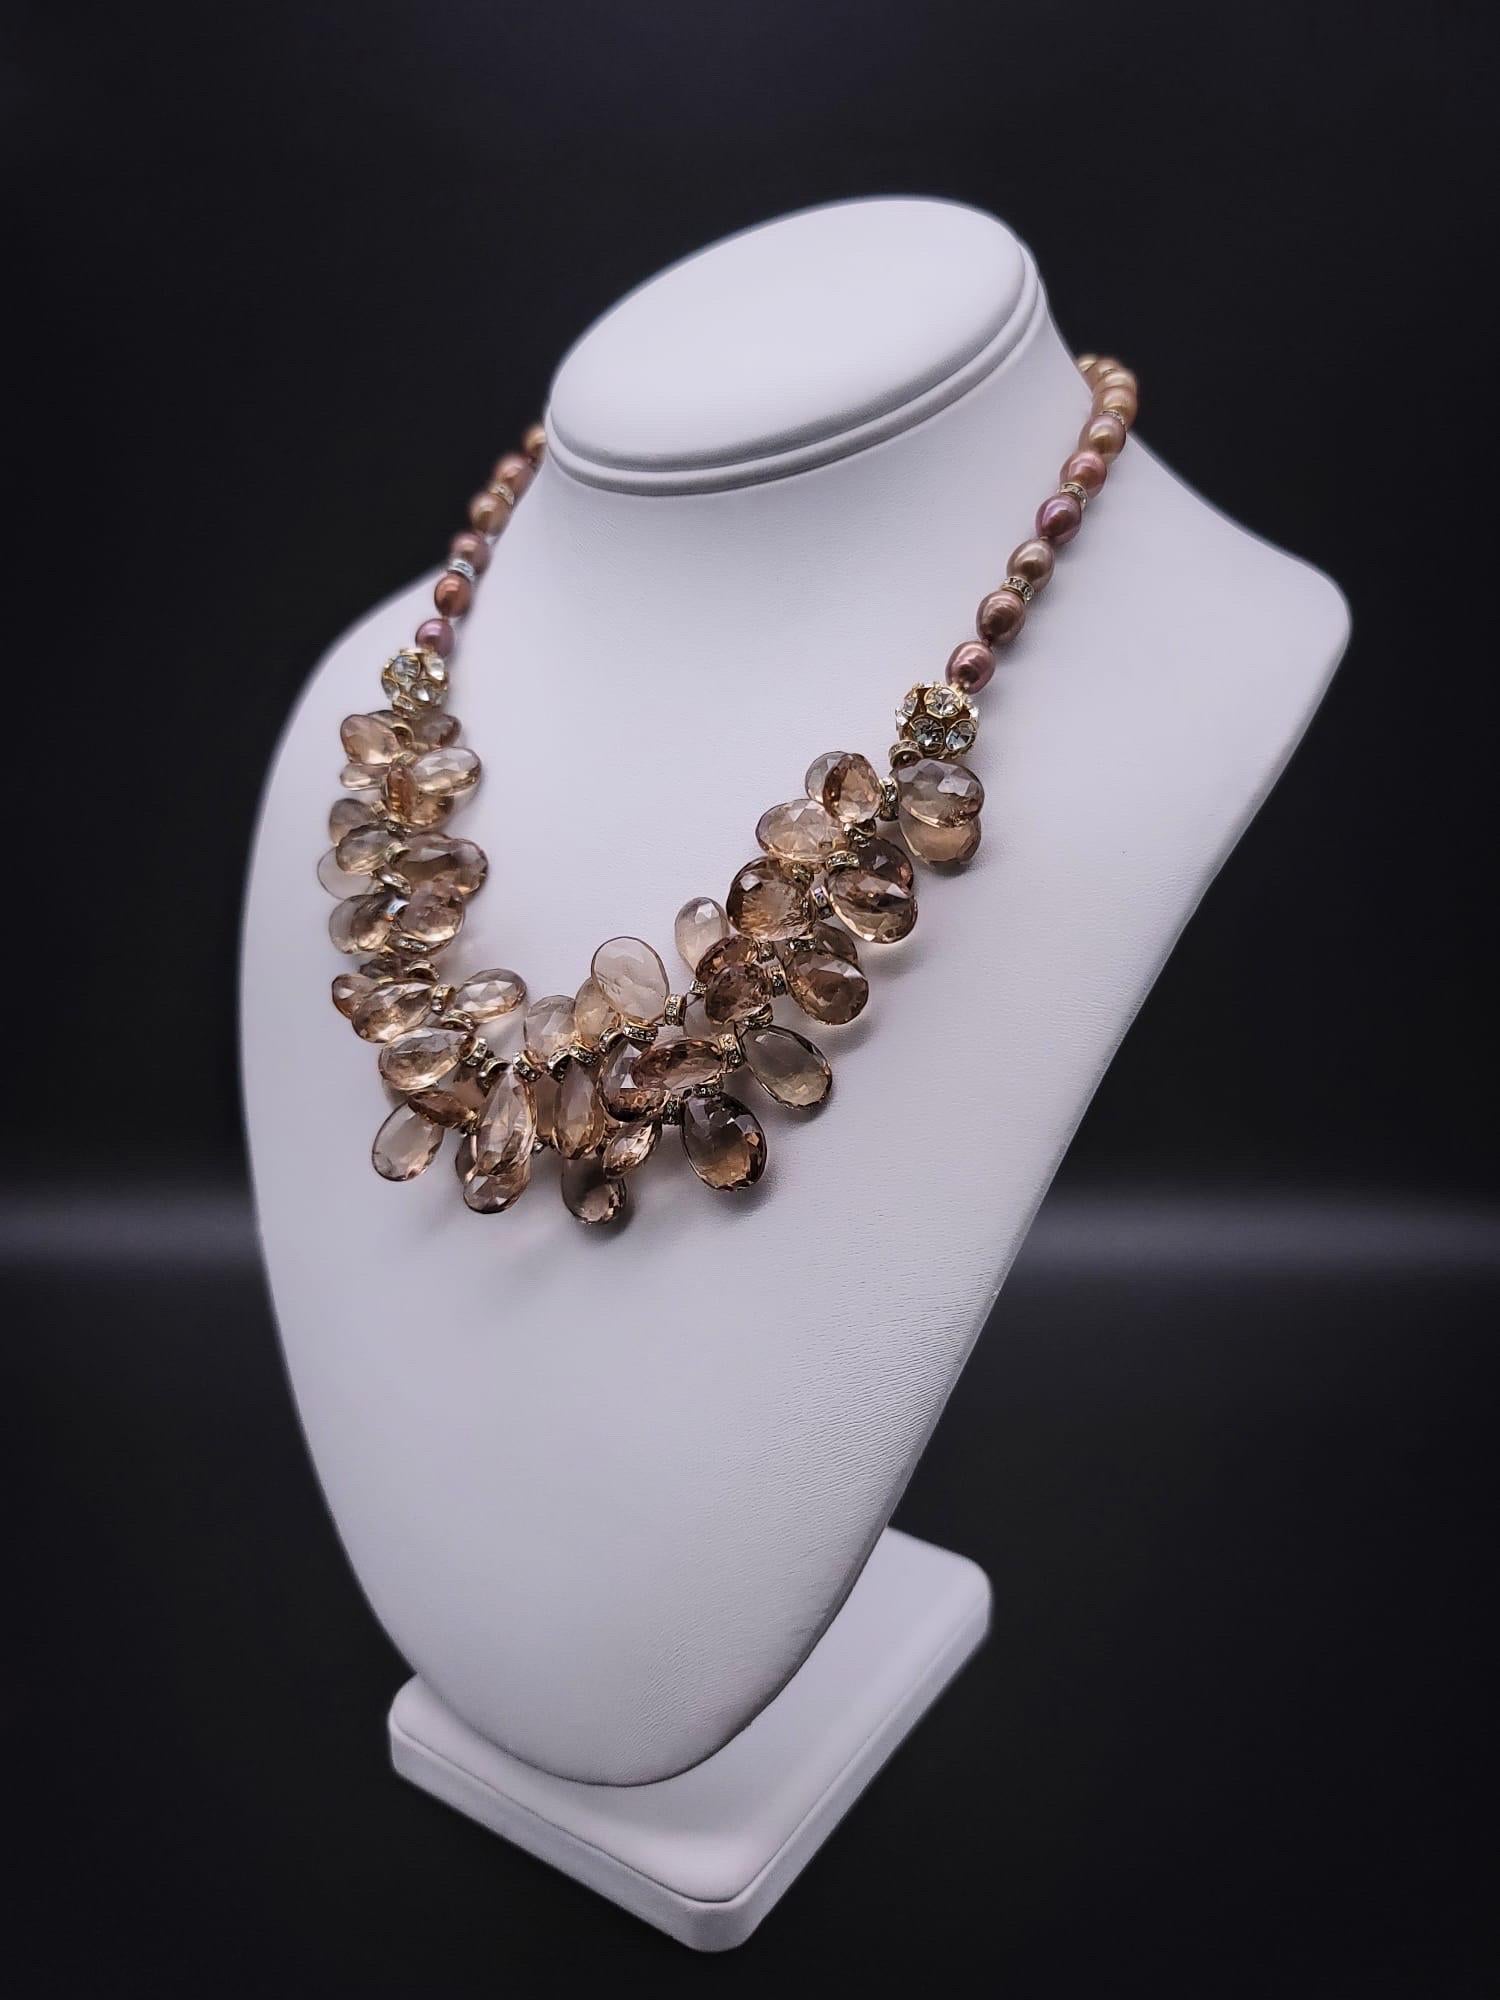 A.Jeschel A dramatic mix of faceted champagne quartz necklace For Sale 1